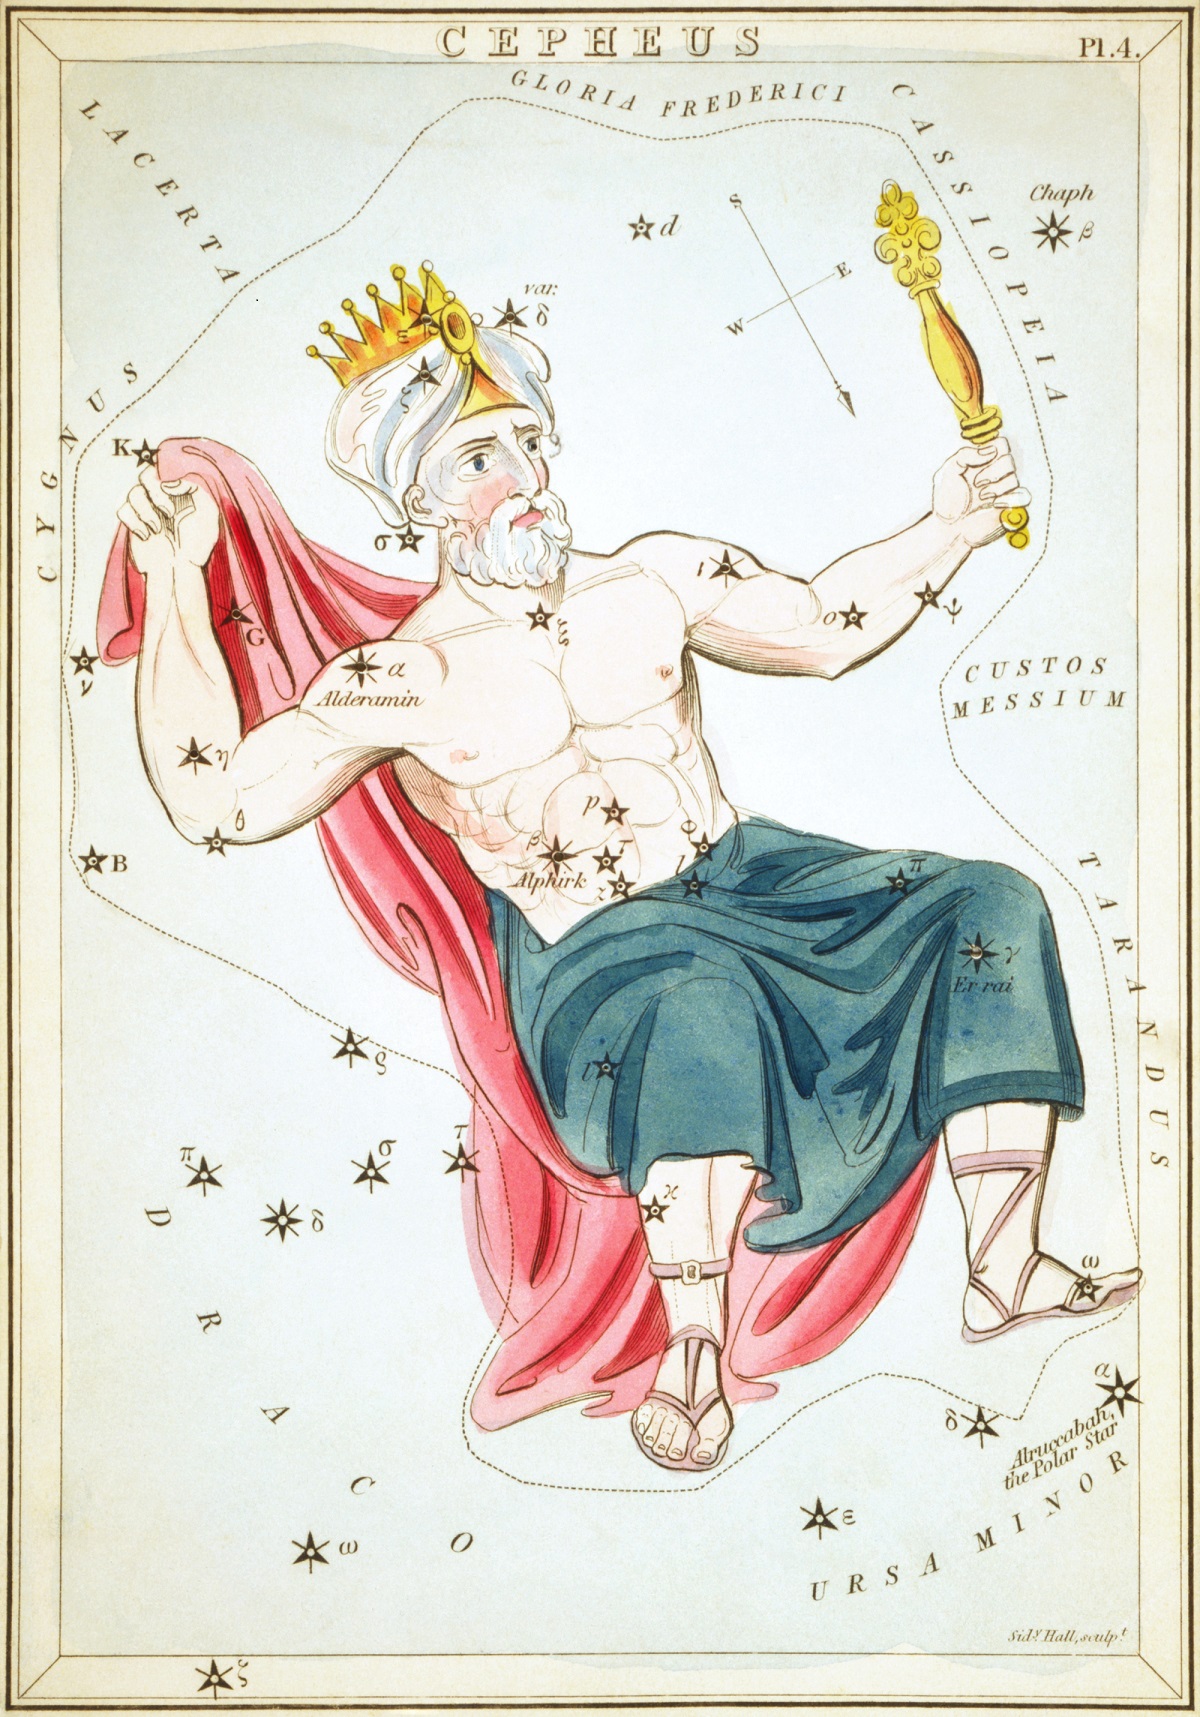 The Cepheus Constellation - Universe Today